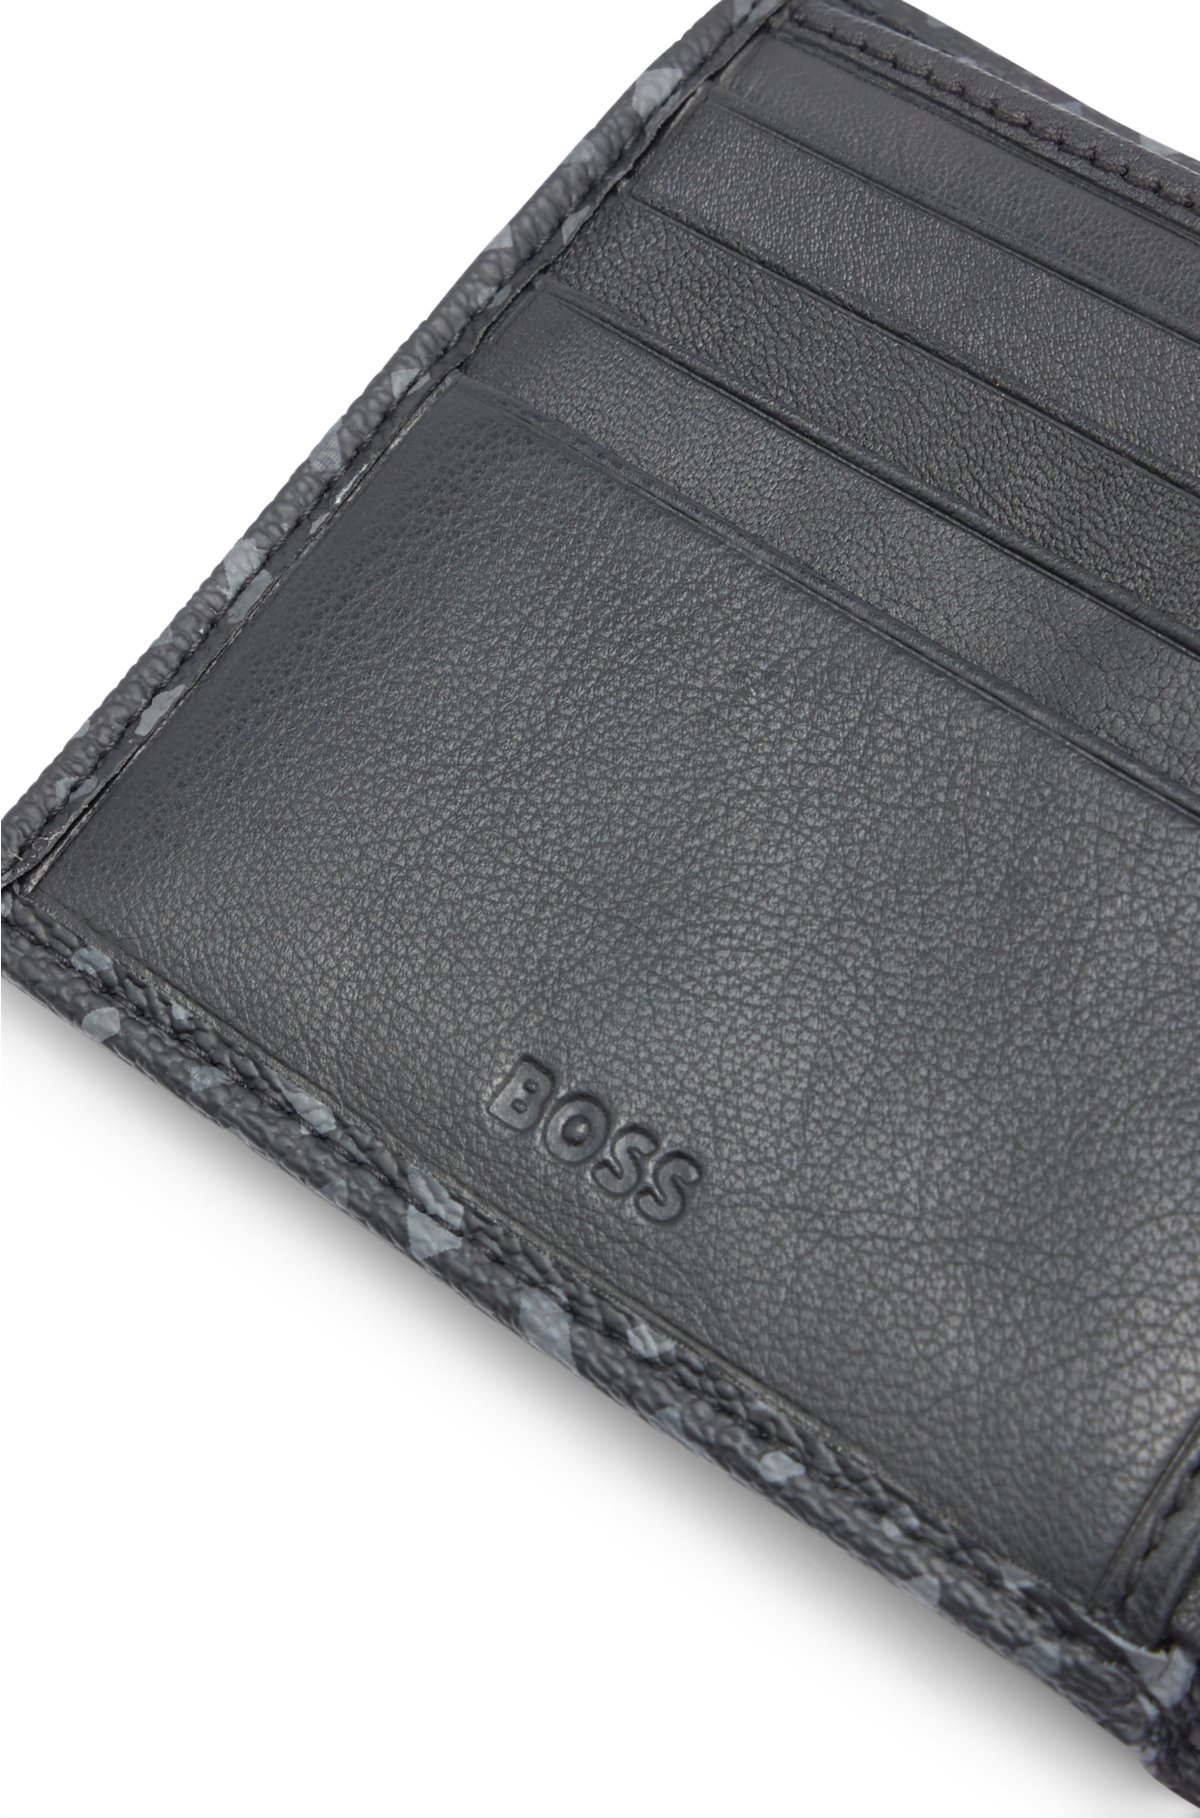 BOSS - Structured billfold wallet with monogram detailing